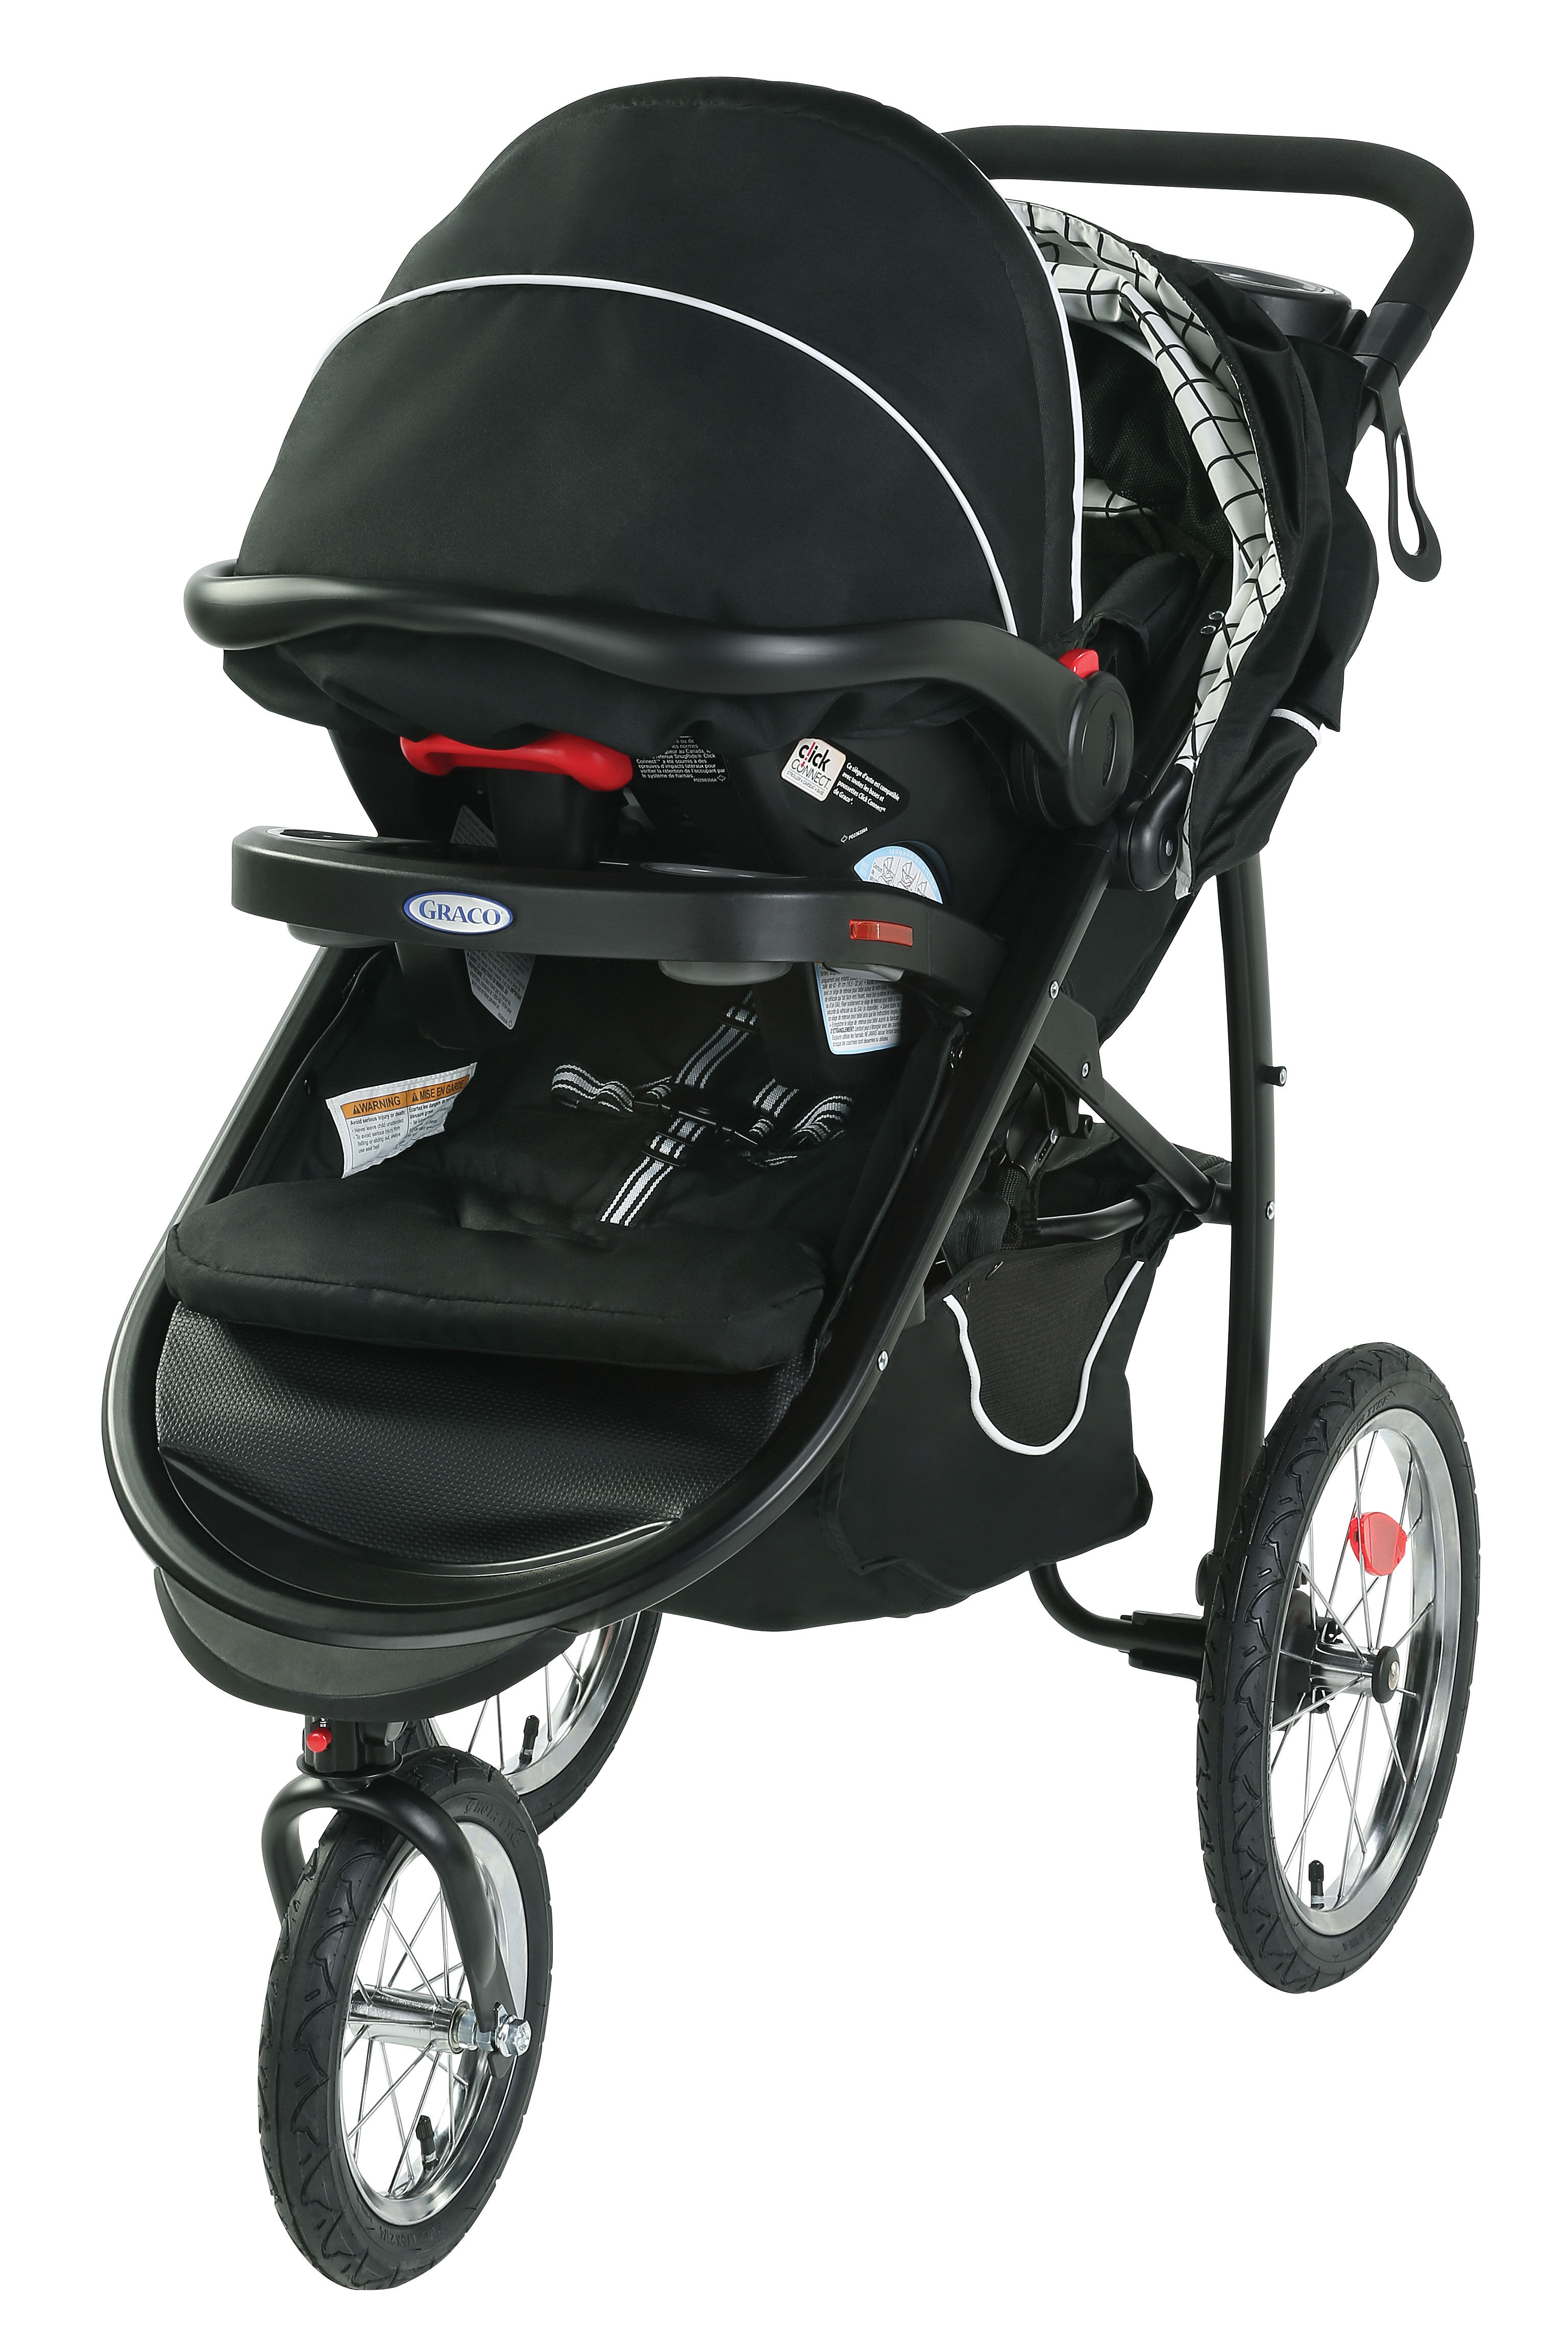 graco jogging stroller car seat compatible